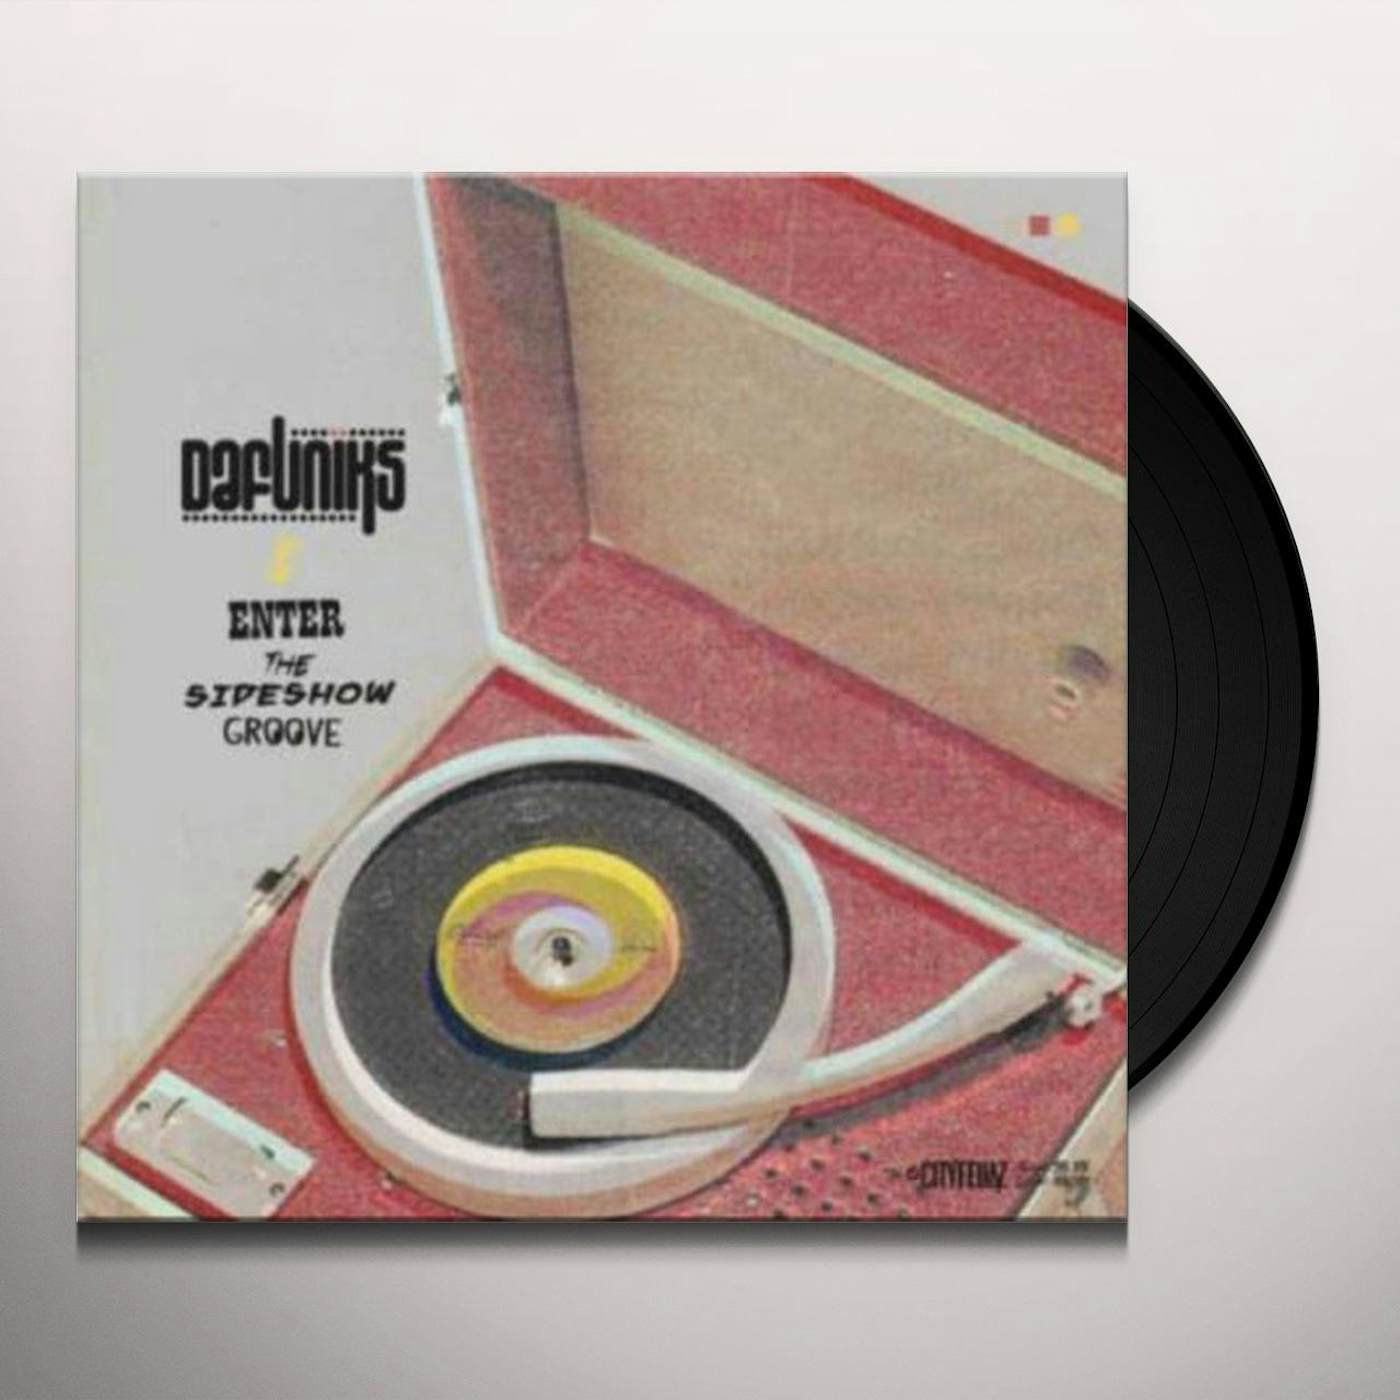 Dafuniks Enter The Sideshow Groove Vinyl Record